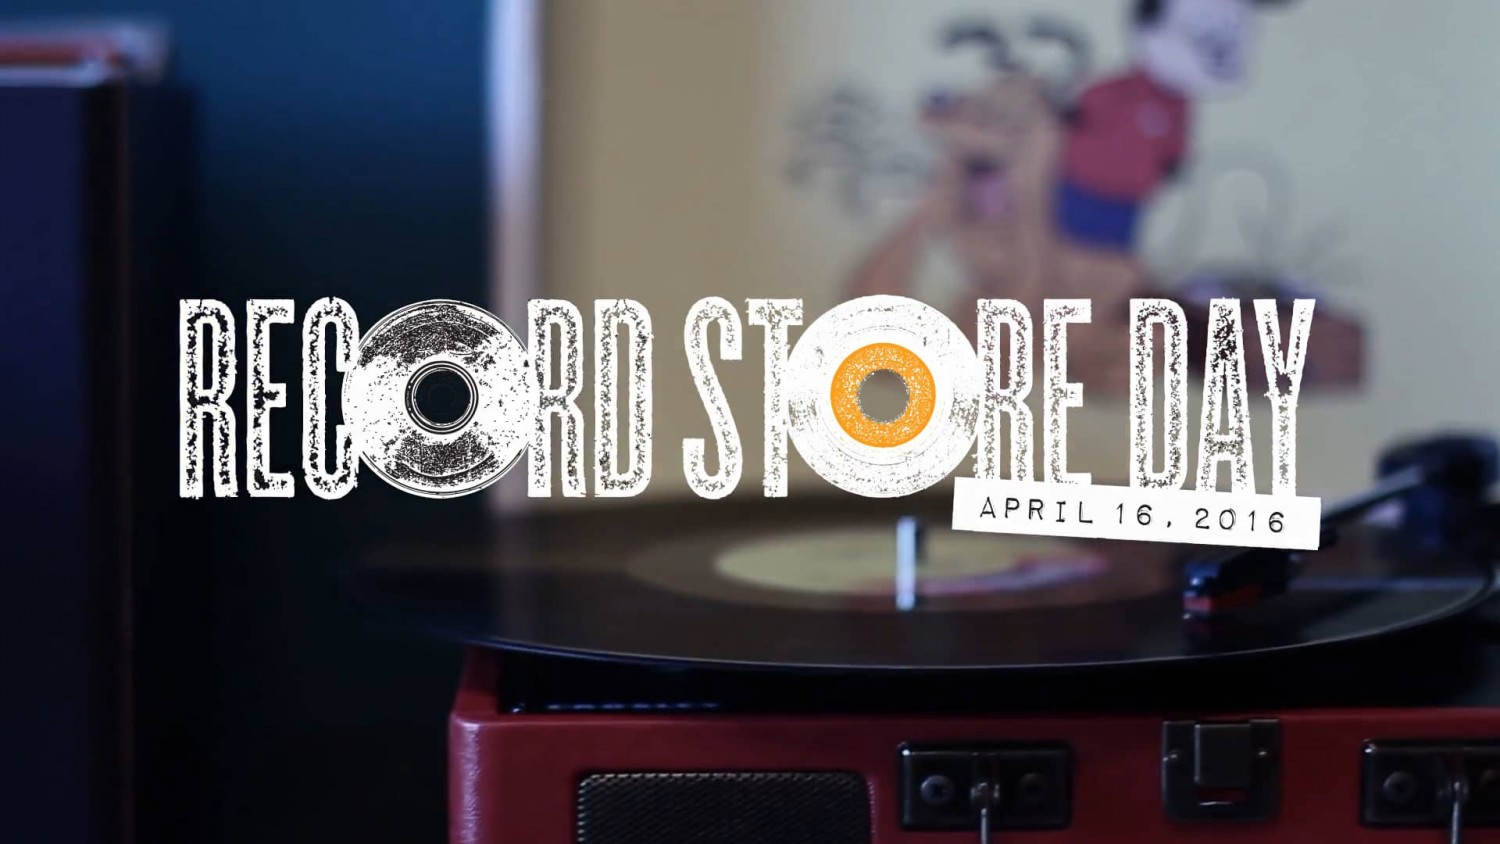 Vinyl geeks rejoice! Record store day 2016 is this weekend!